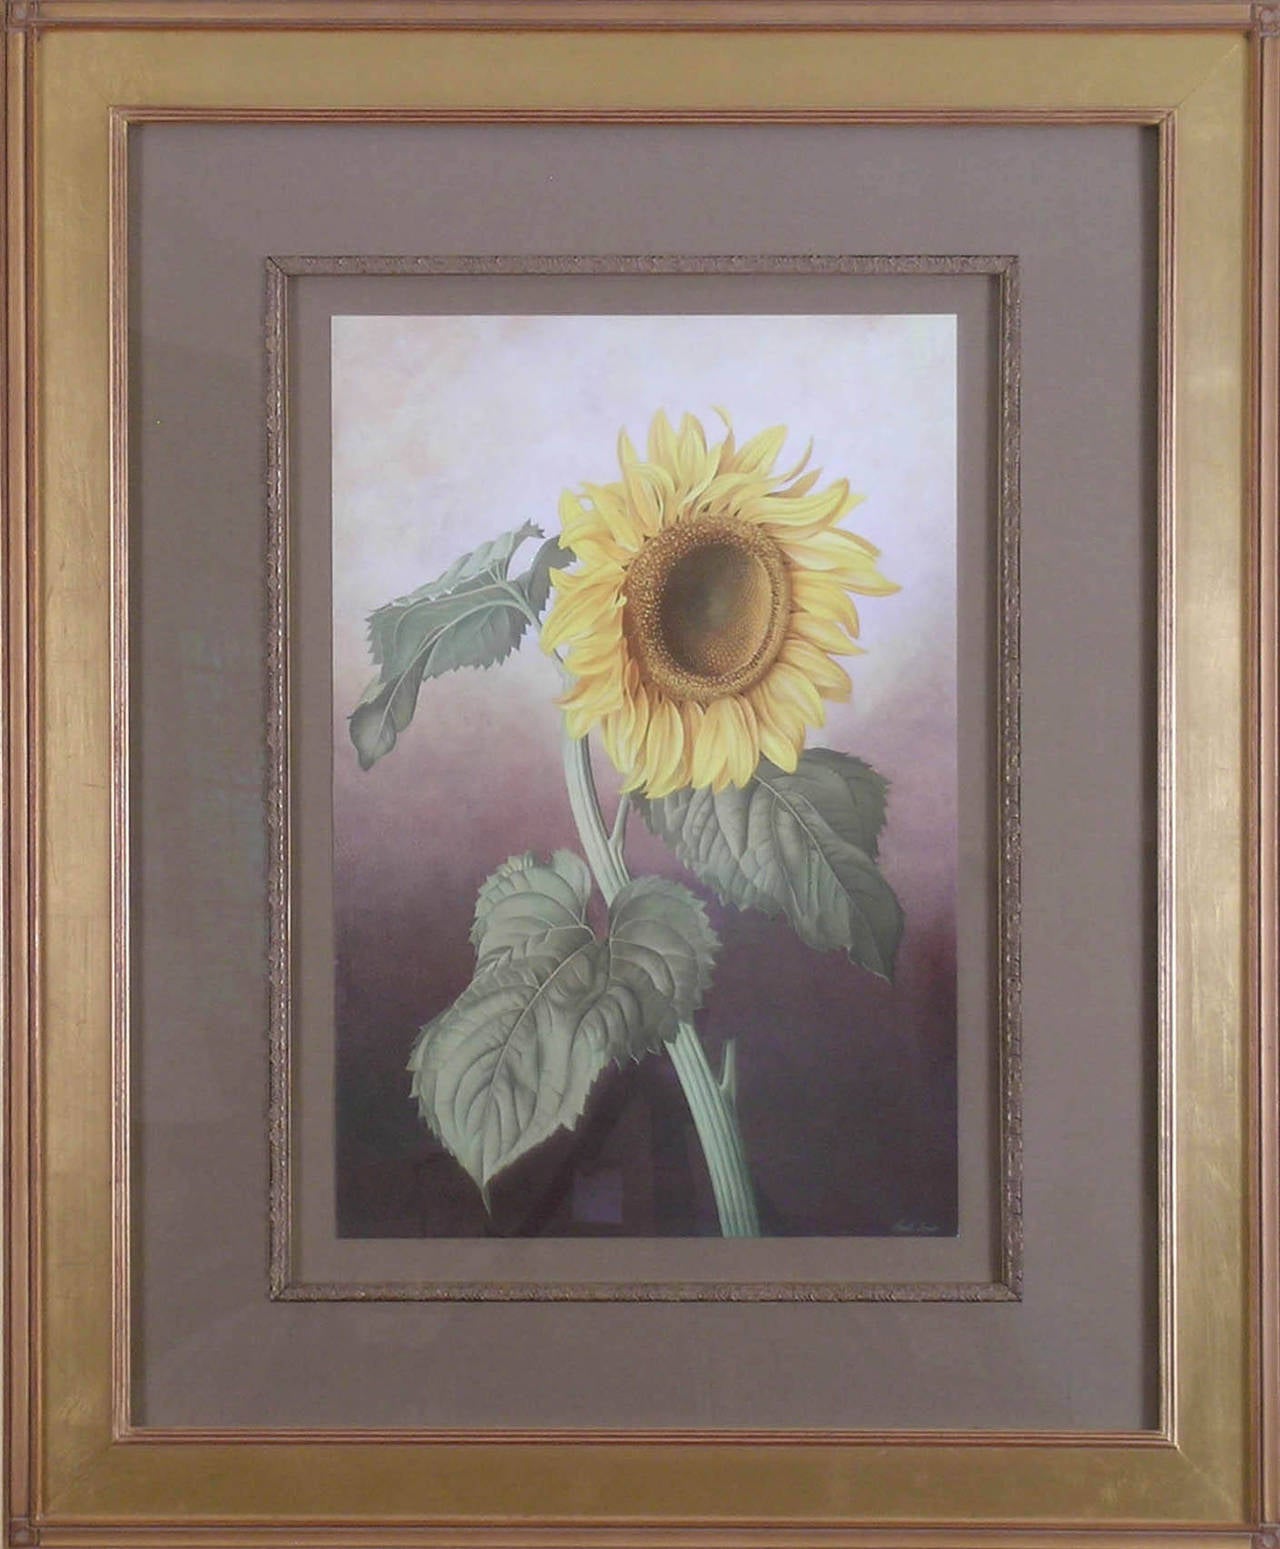 Sunflower (Healianthus Annus) - Print by Paul Jones b.1921